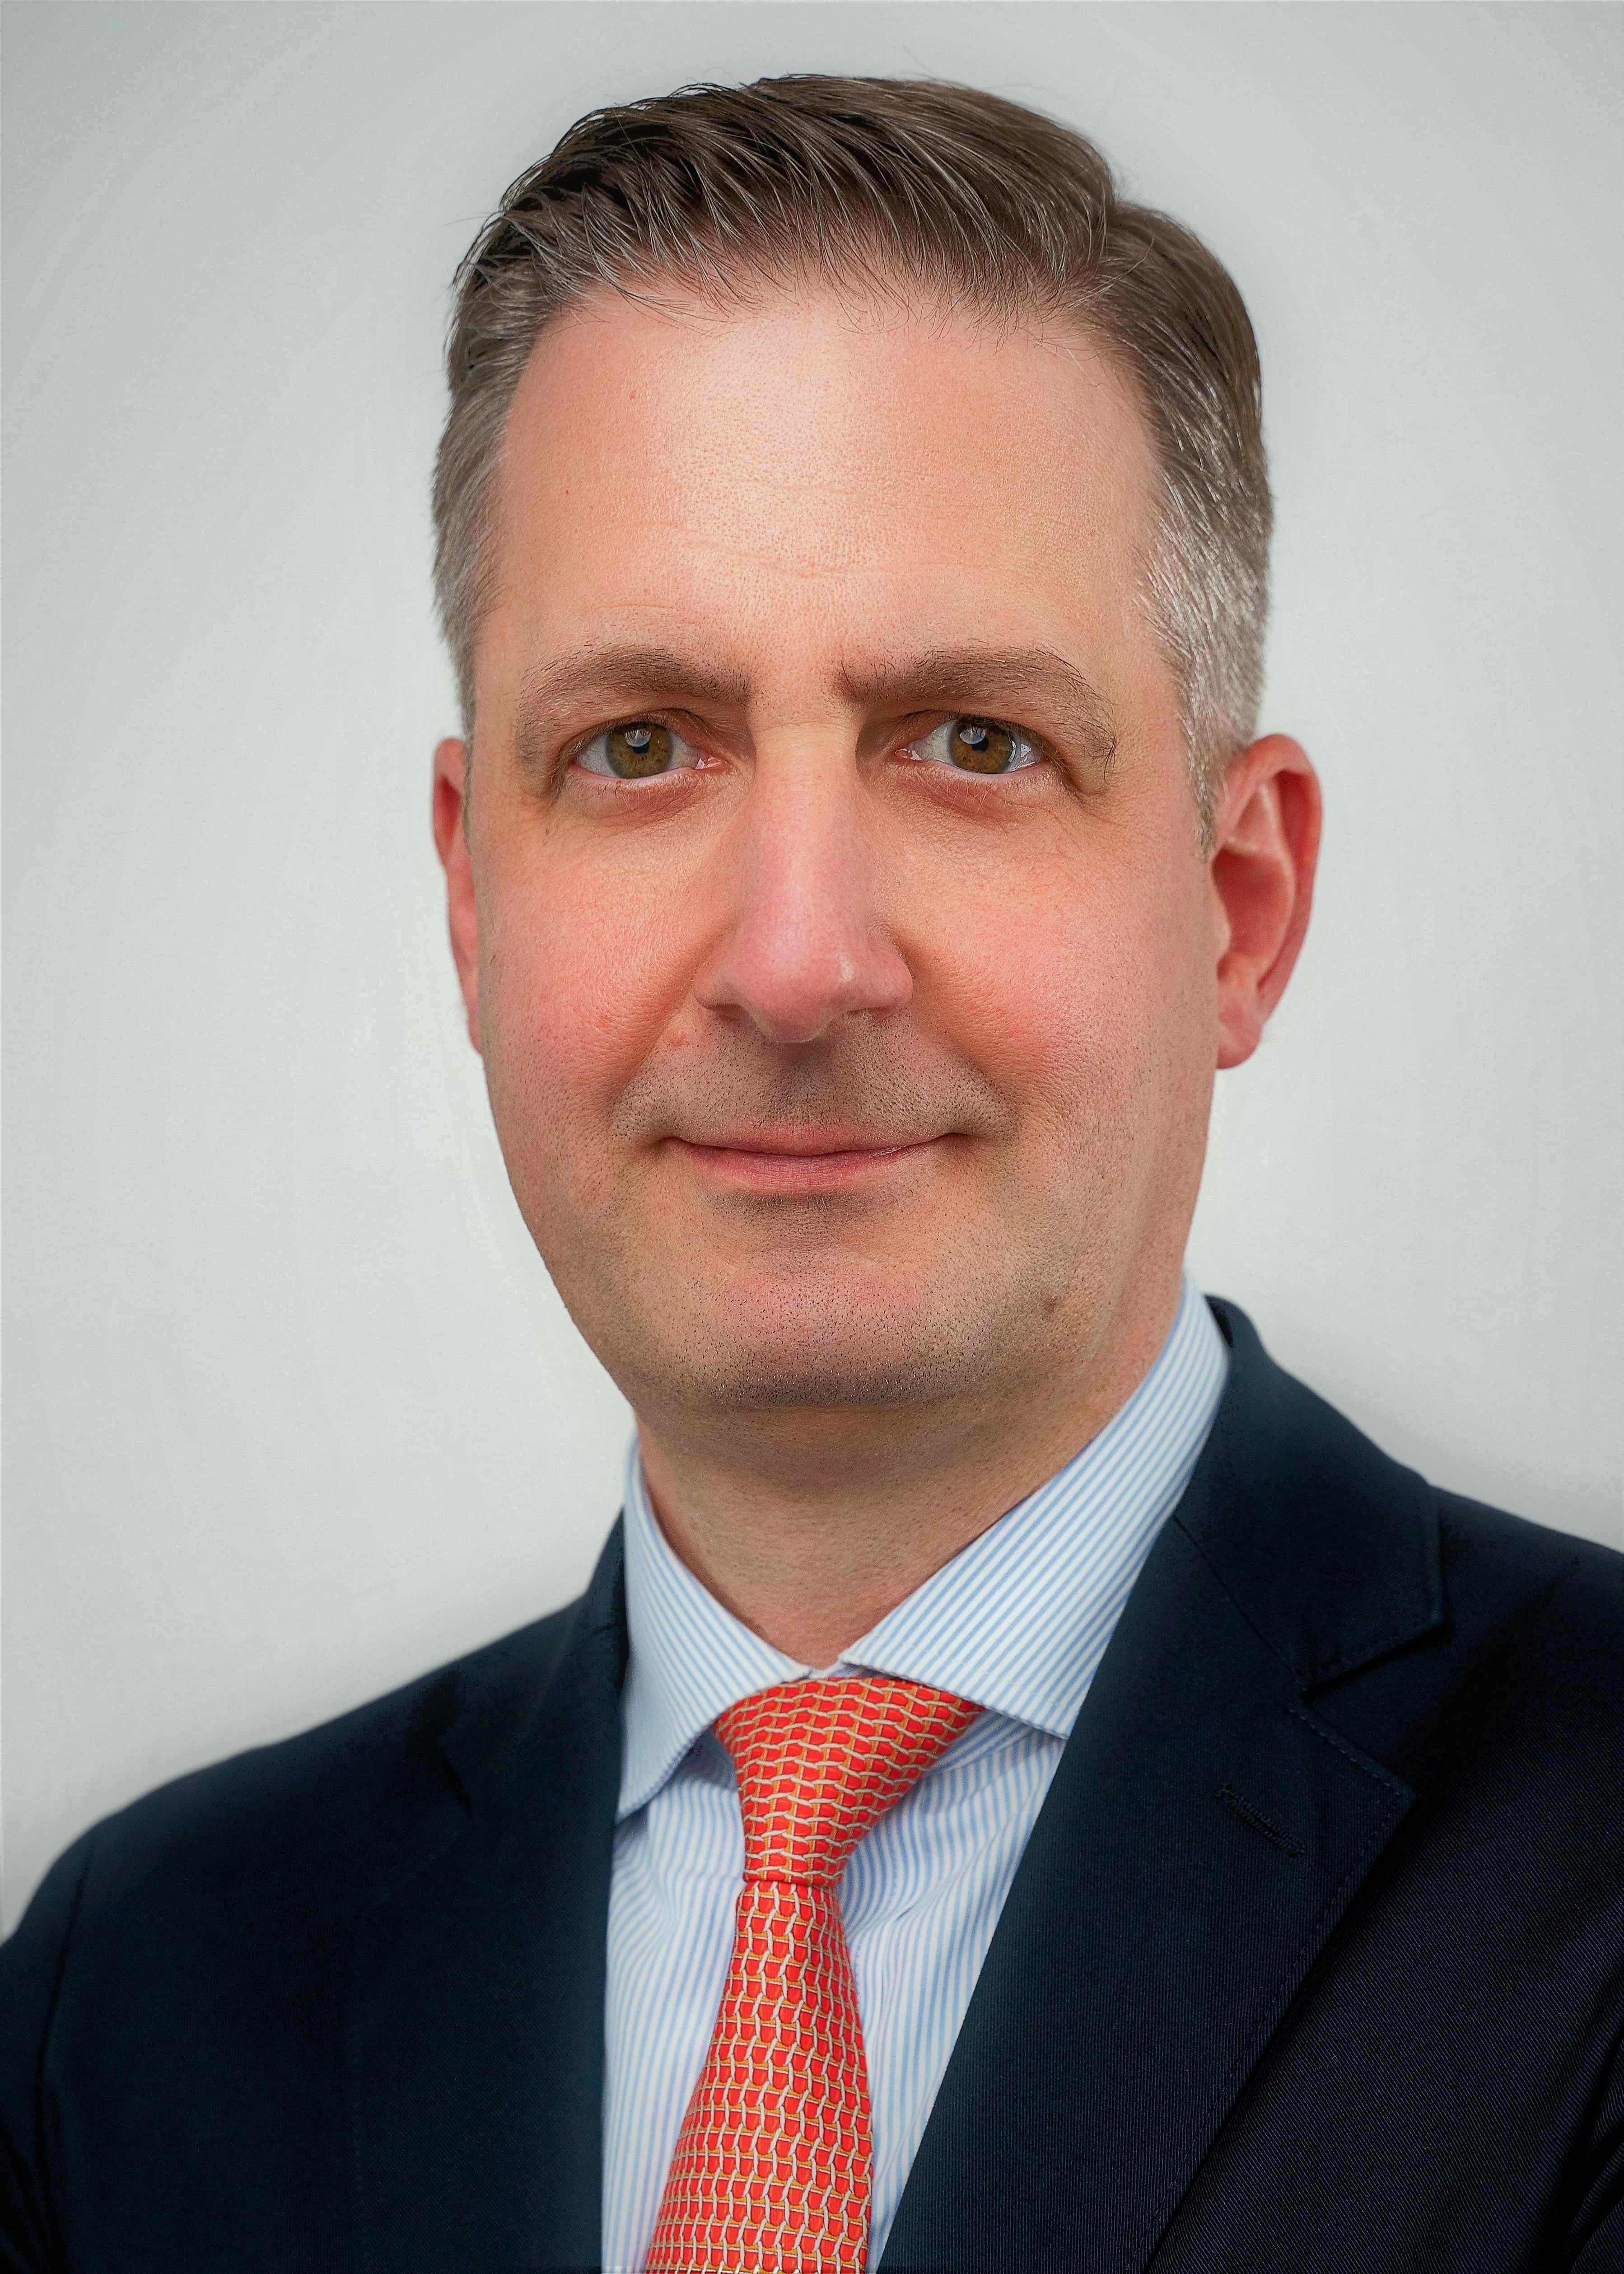 Thomas Schindler, directeur financier, Allianz GI